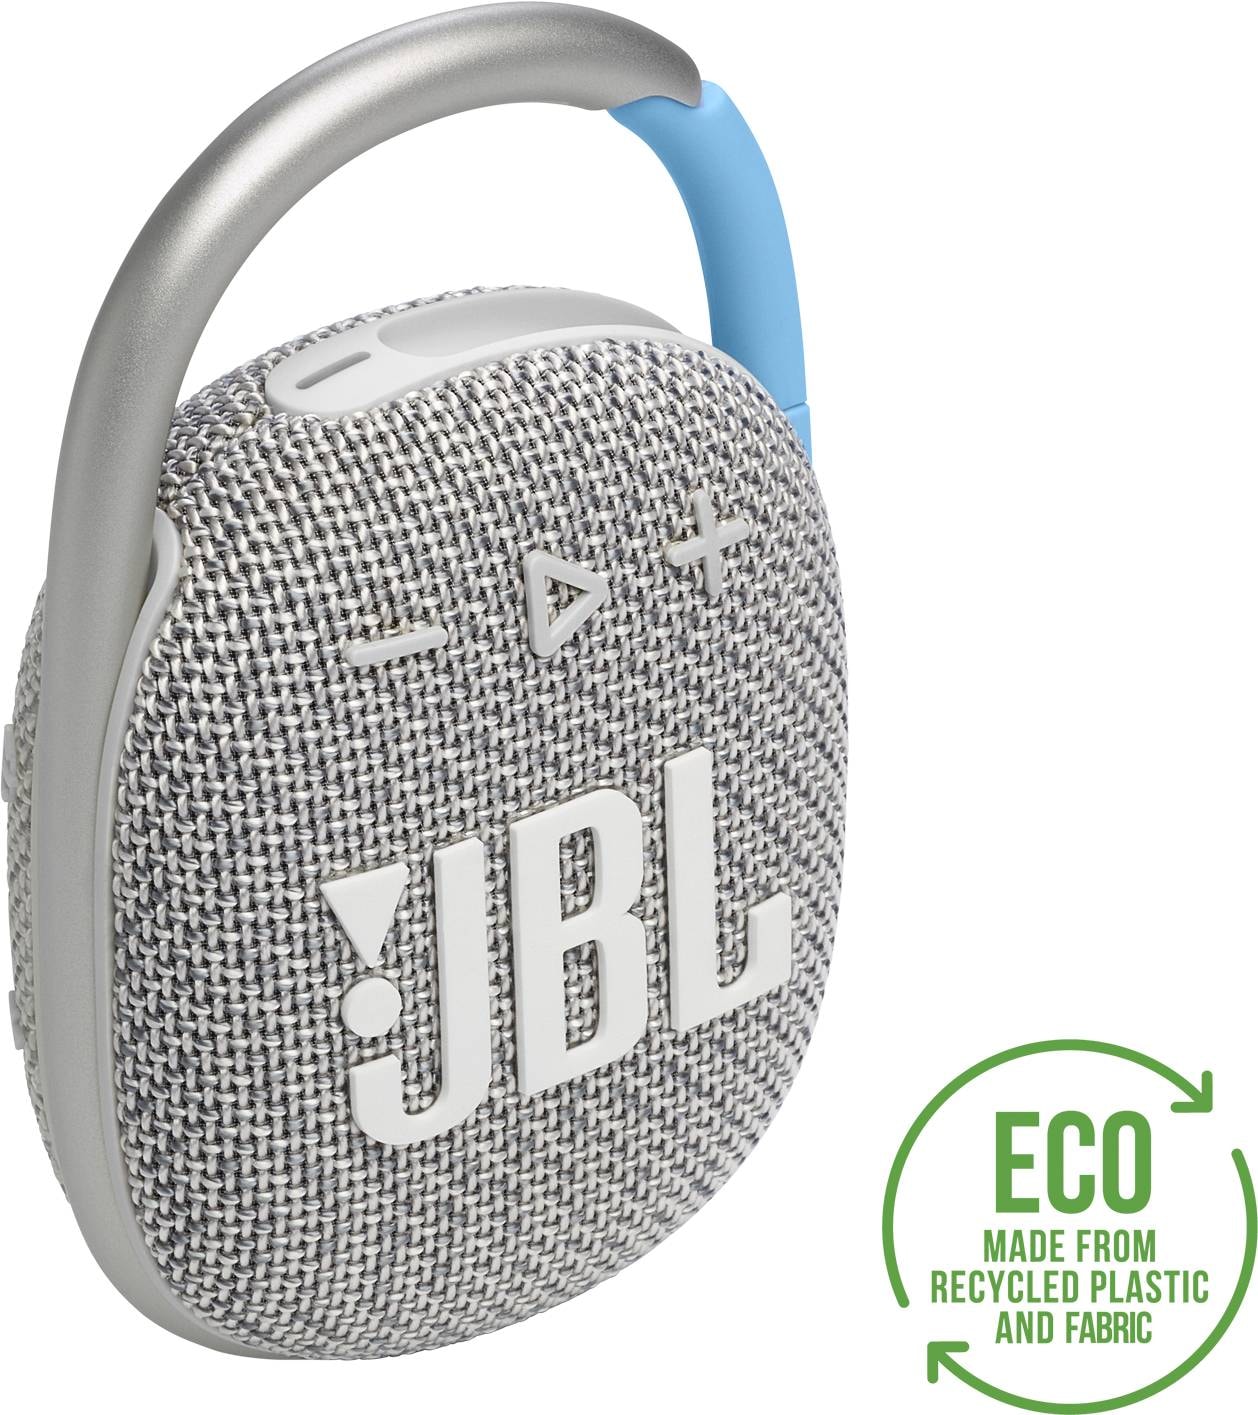 JBL Clip 4 - Mini enceinte sans fil - bluetooth - noir